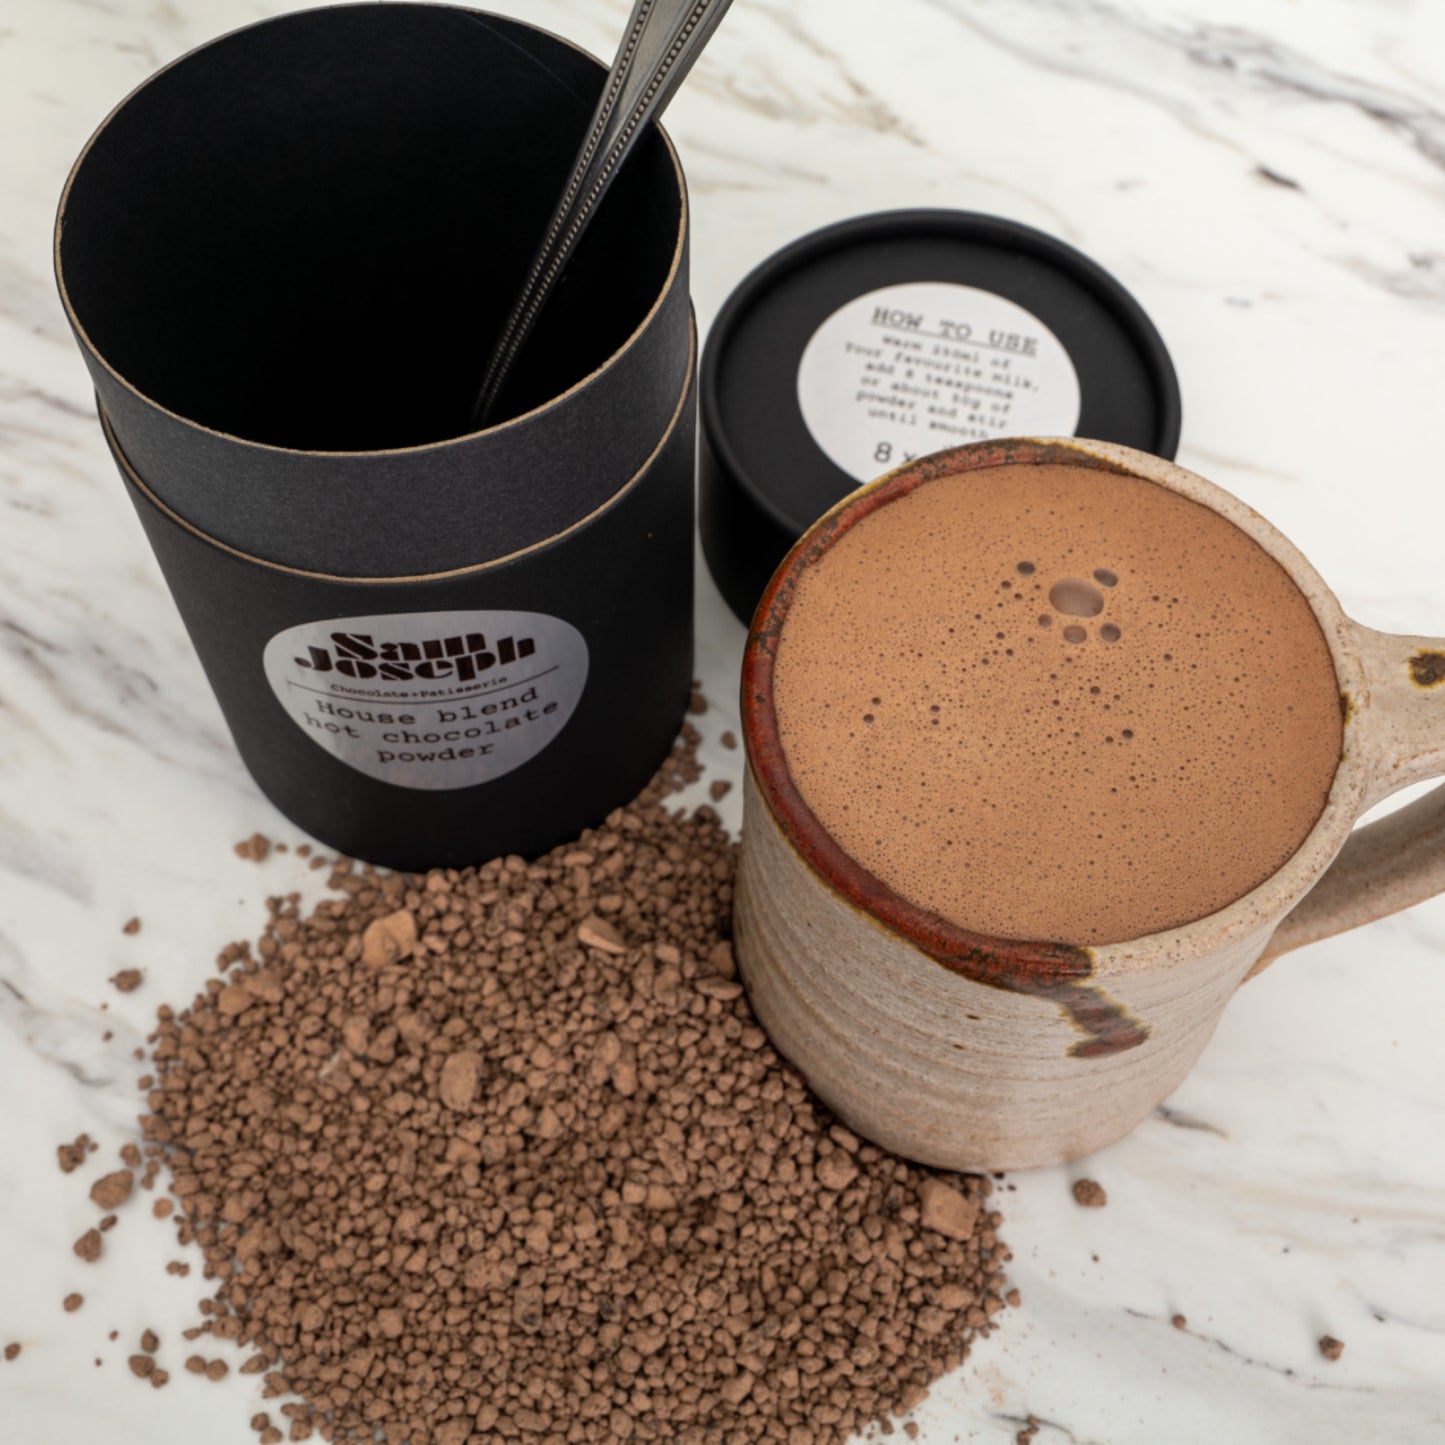 House blend hot chocolate powder